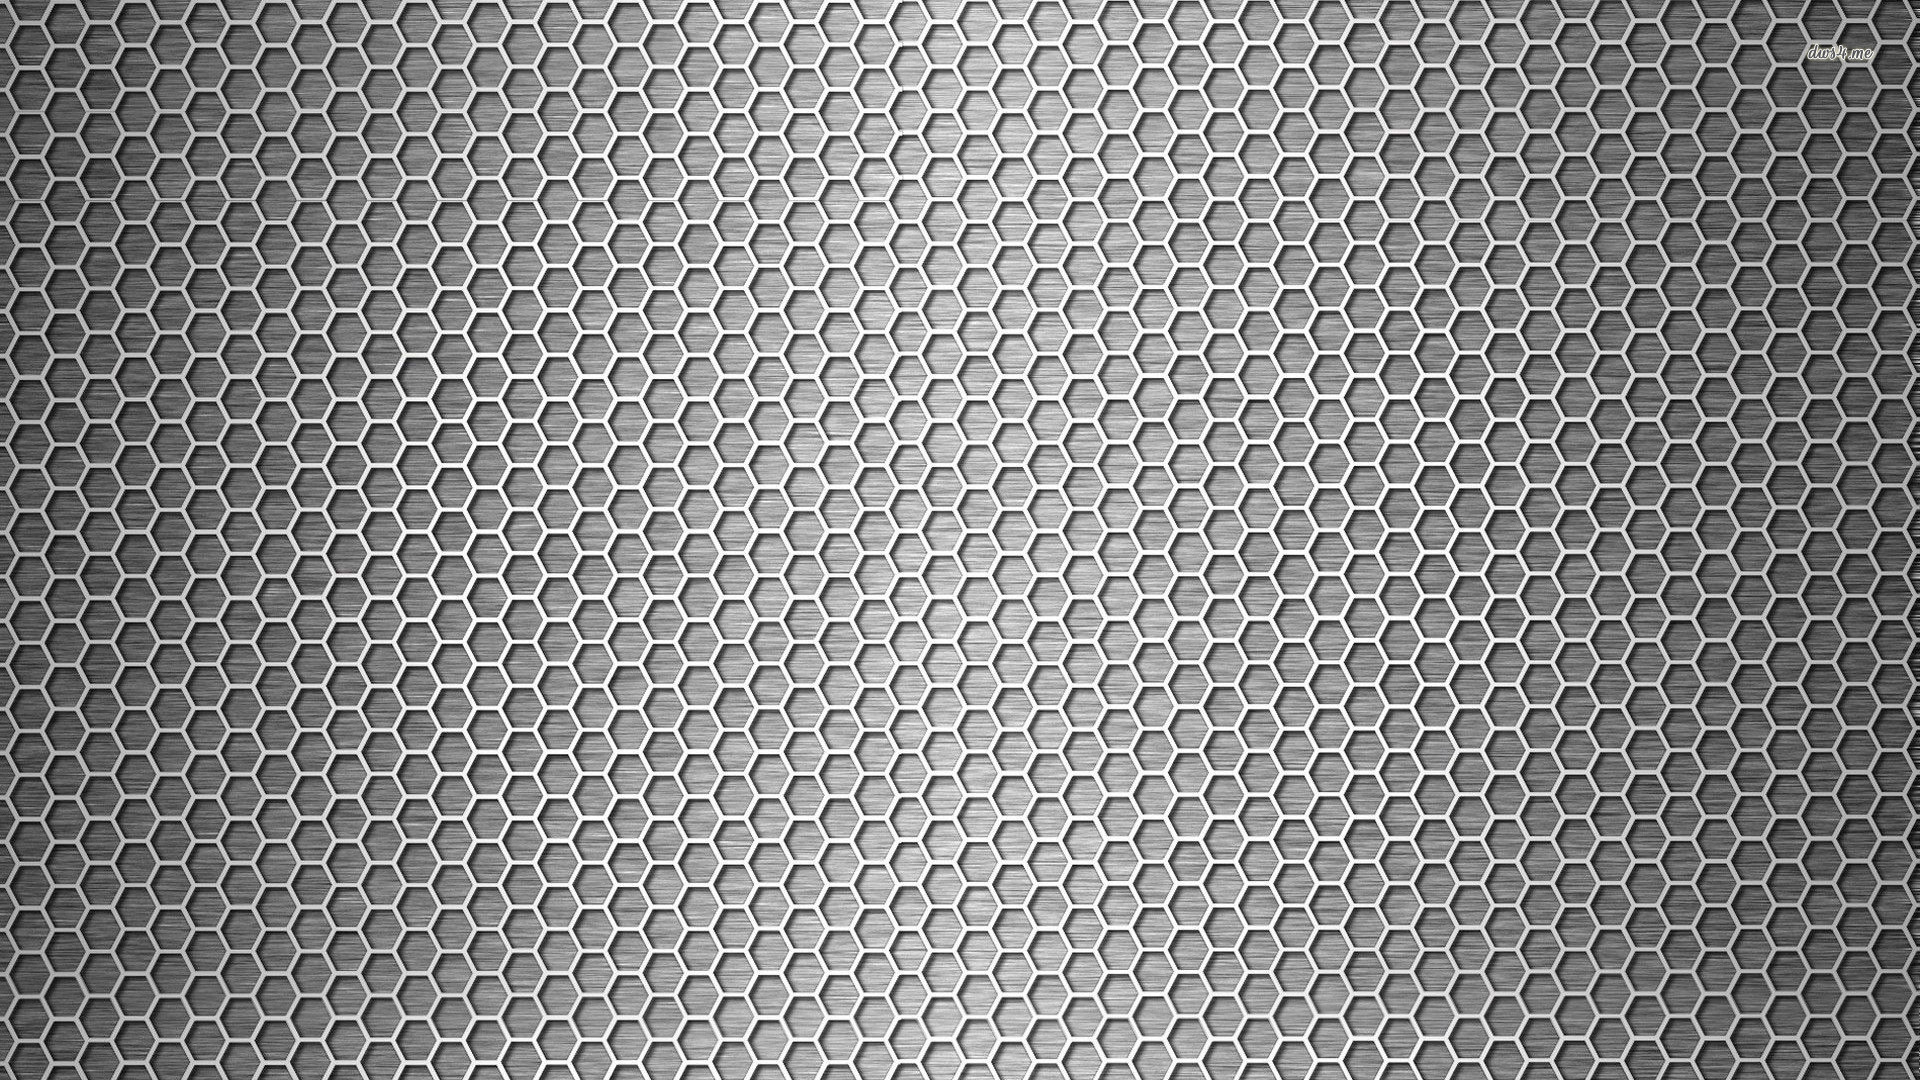 1920x1080 Windows Carbon Fiber Desktop Background Wallpapers : Abstract .